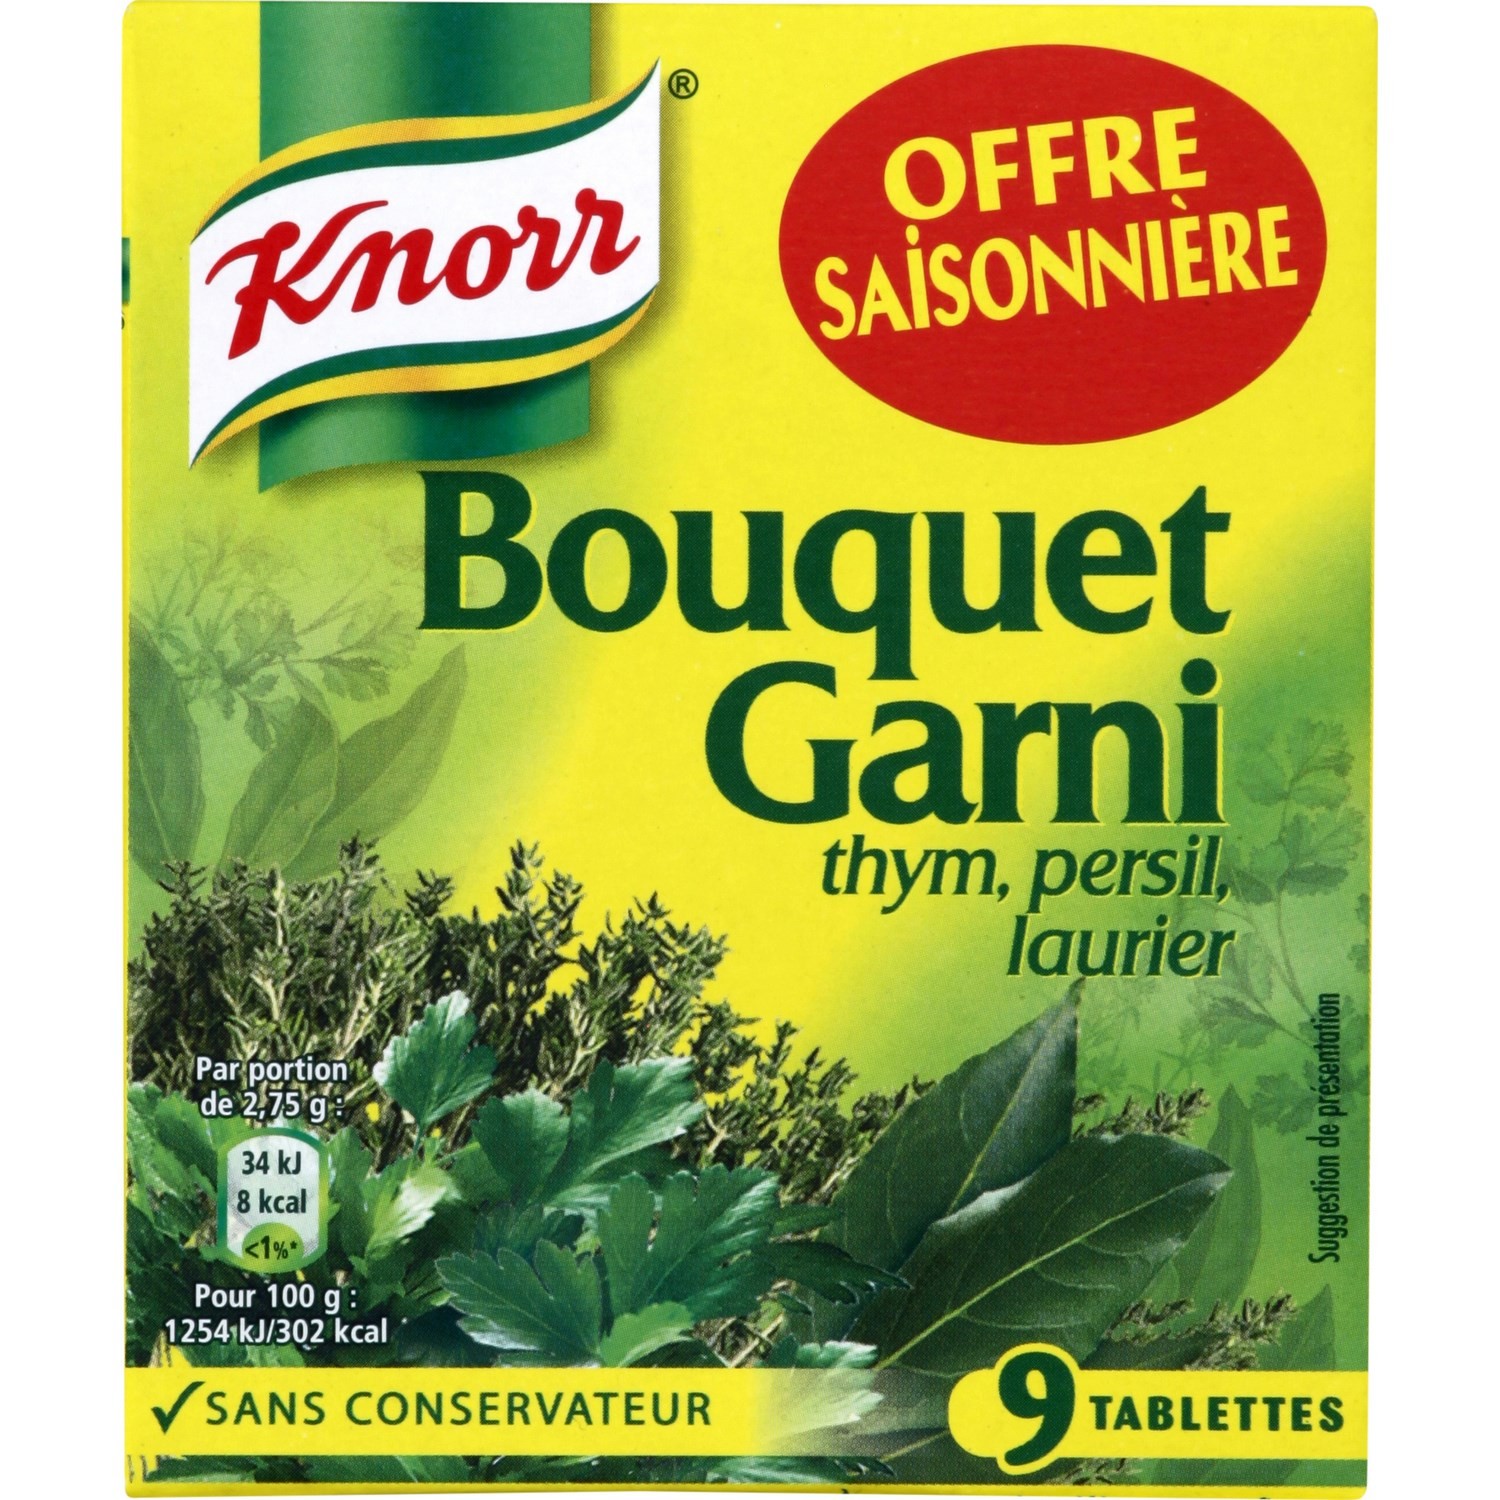 Bouquet Garni (thym, persil, laurier)